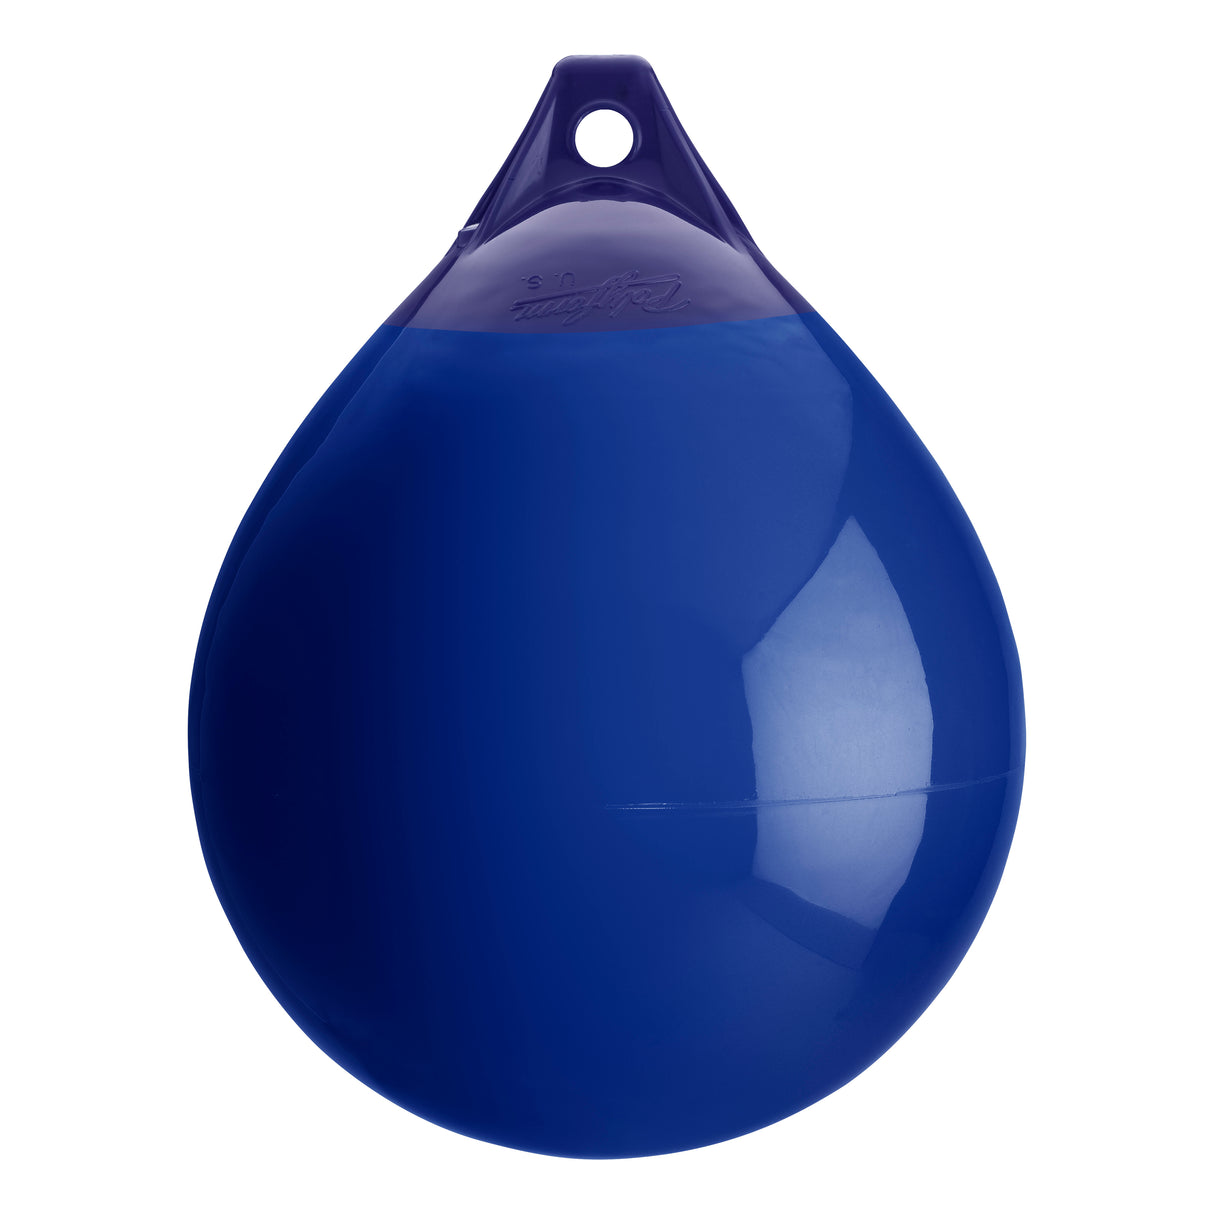 Cobalt Blue inflatable buoy, Polyform A-3 